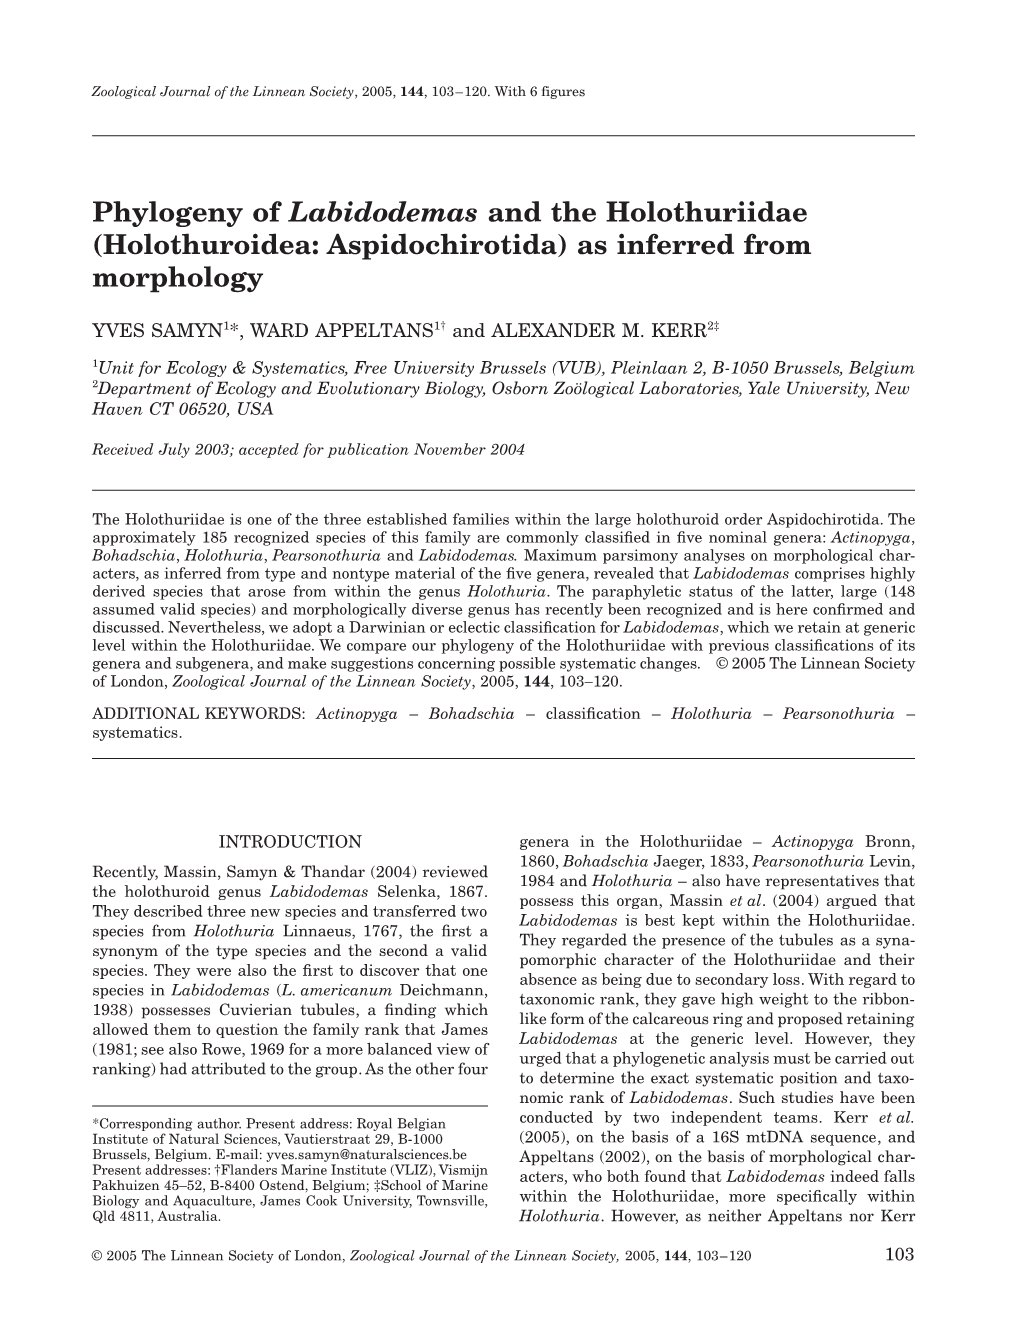 Phylogeny of Labidodemas and the Holothuriidae (Holothuroidea: Aspidochirotida) As Inferred from Morphology